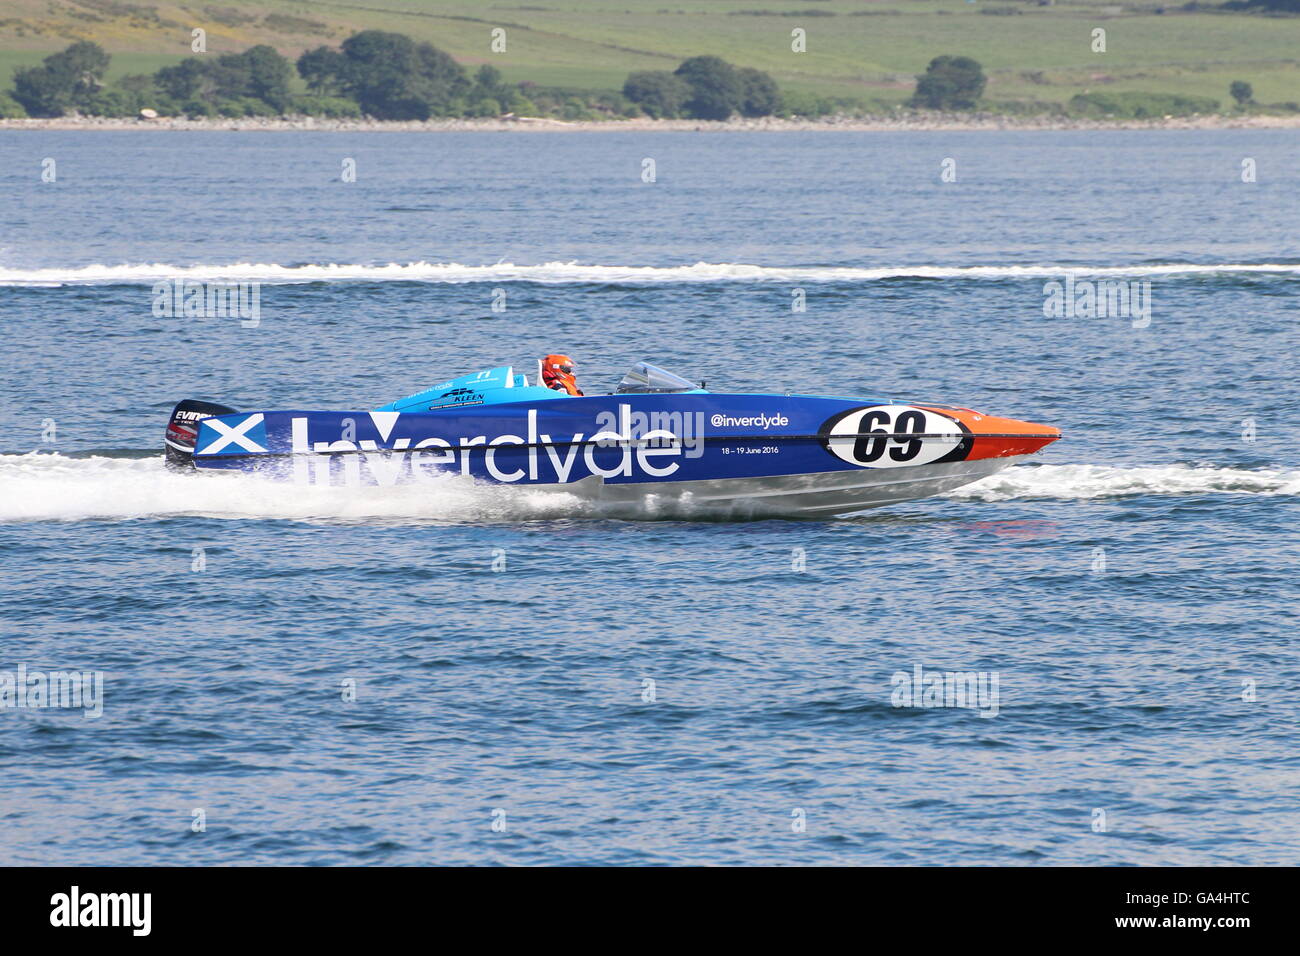 El espíritu de equipo de Inverclyde durante el Grand Prix escocés inaugural del Mar, celebrada en Greenock en el Firth of Clyde. Foto de stock